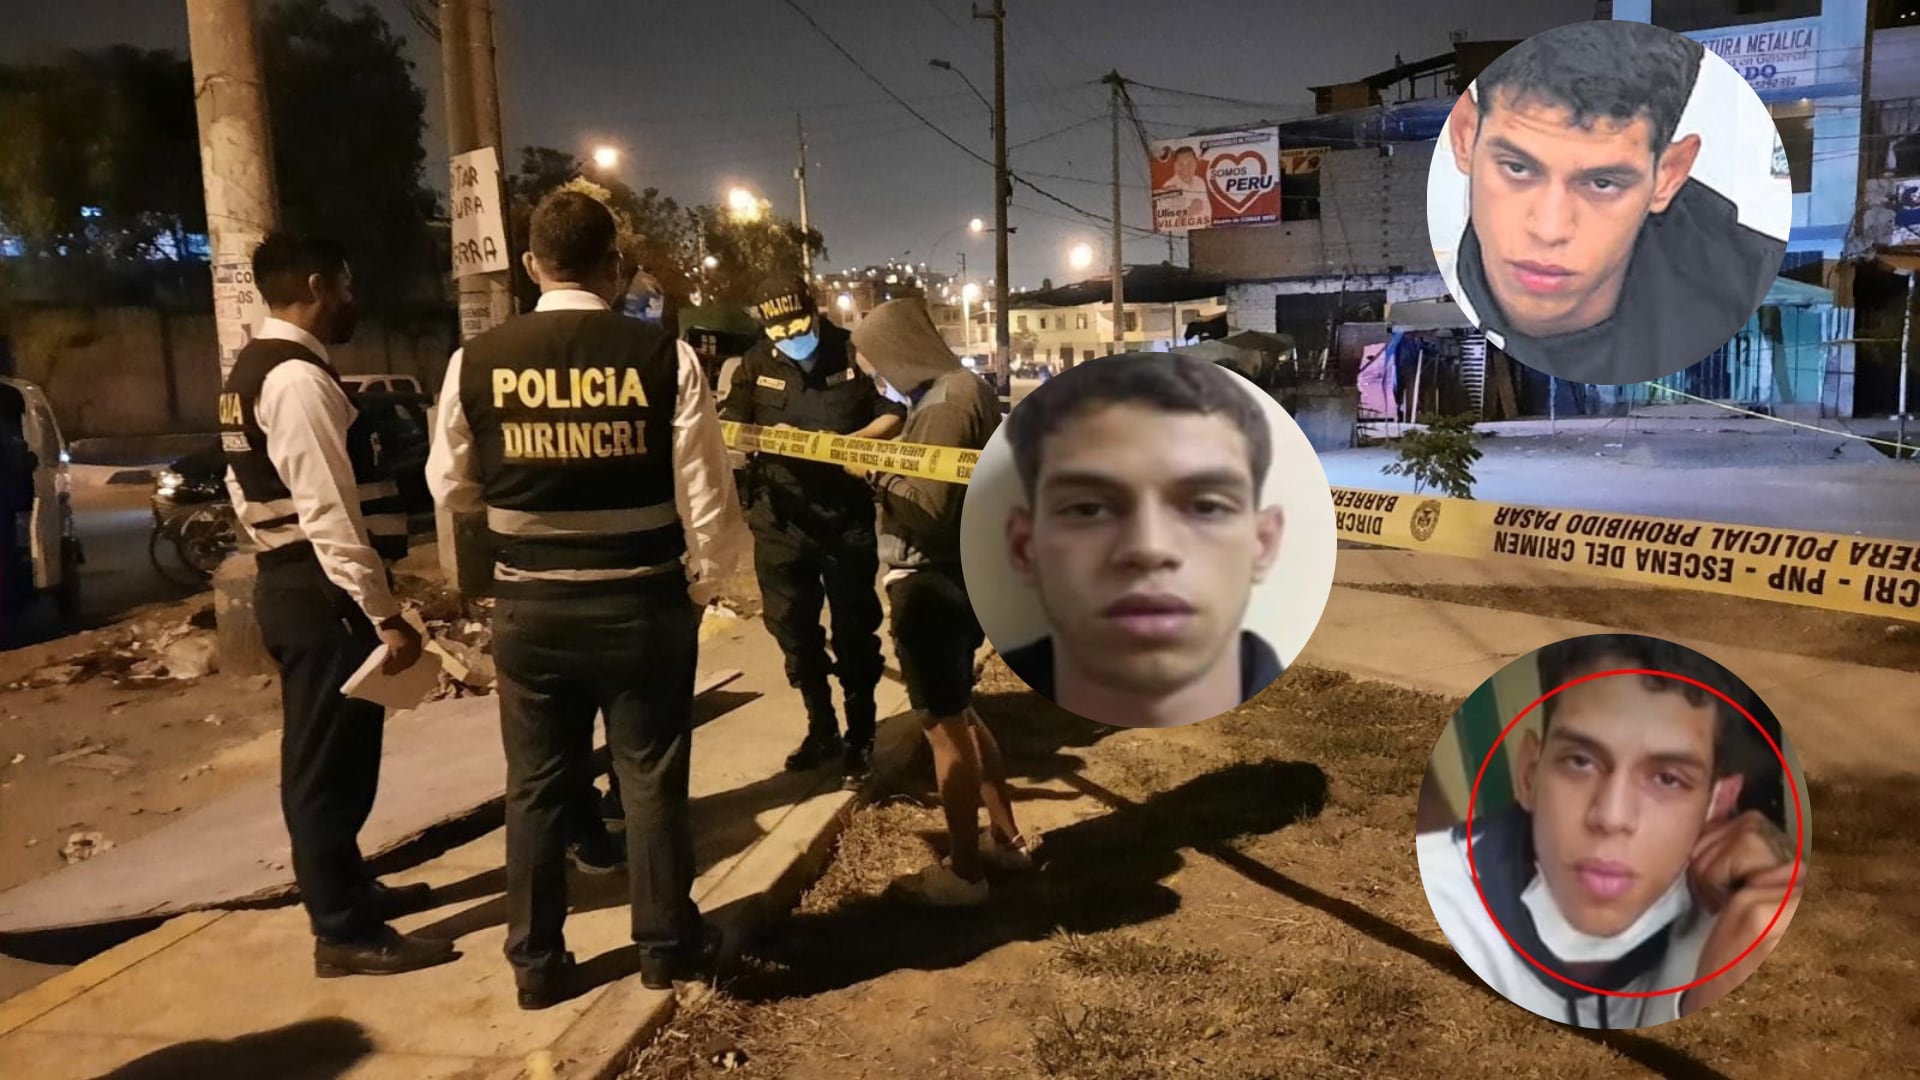 Los delitos del "Maldito Cris", temible delincuente venezolano